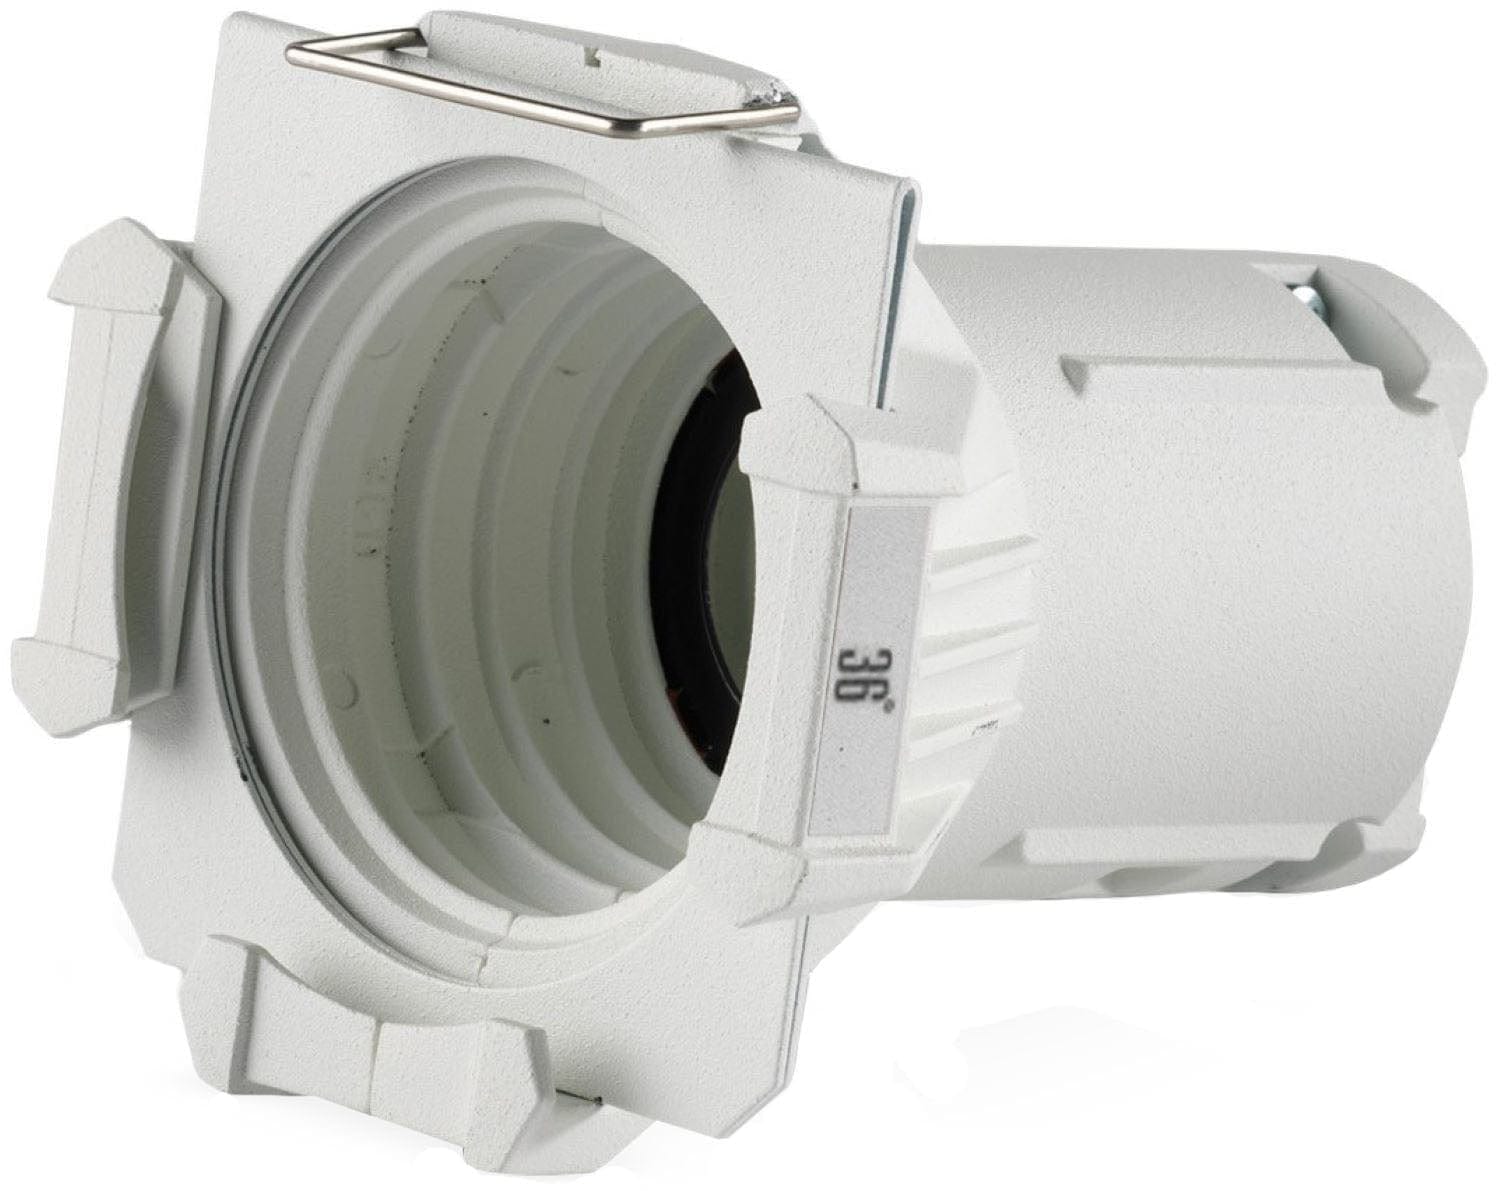 ETC Source Four Mini LED Ellipsoidal 4000 K, 36-Degree Lens Tube with Edison Plug - White (Portable) - PSSL ProSound and Stage Lighting